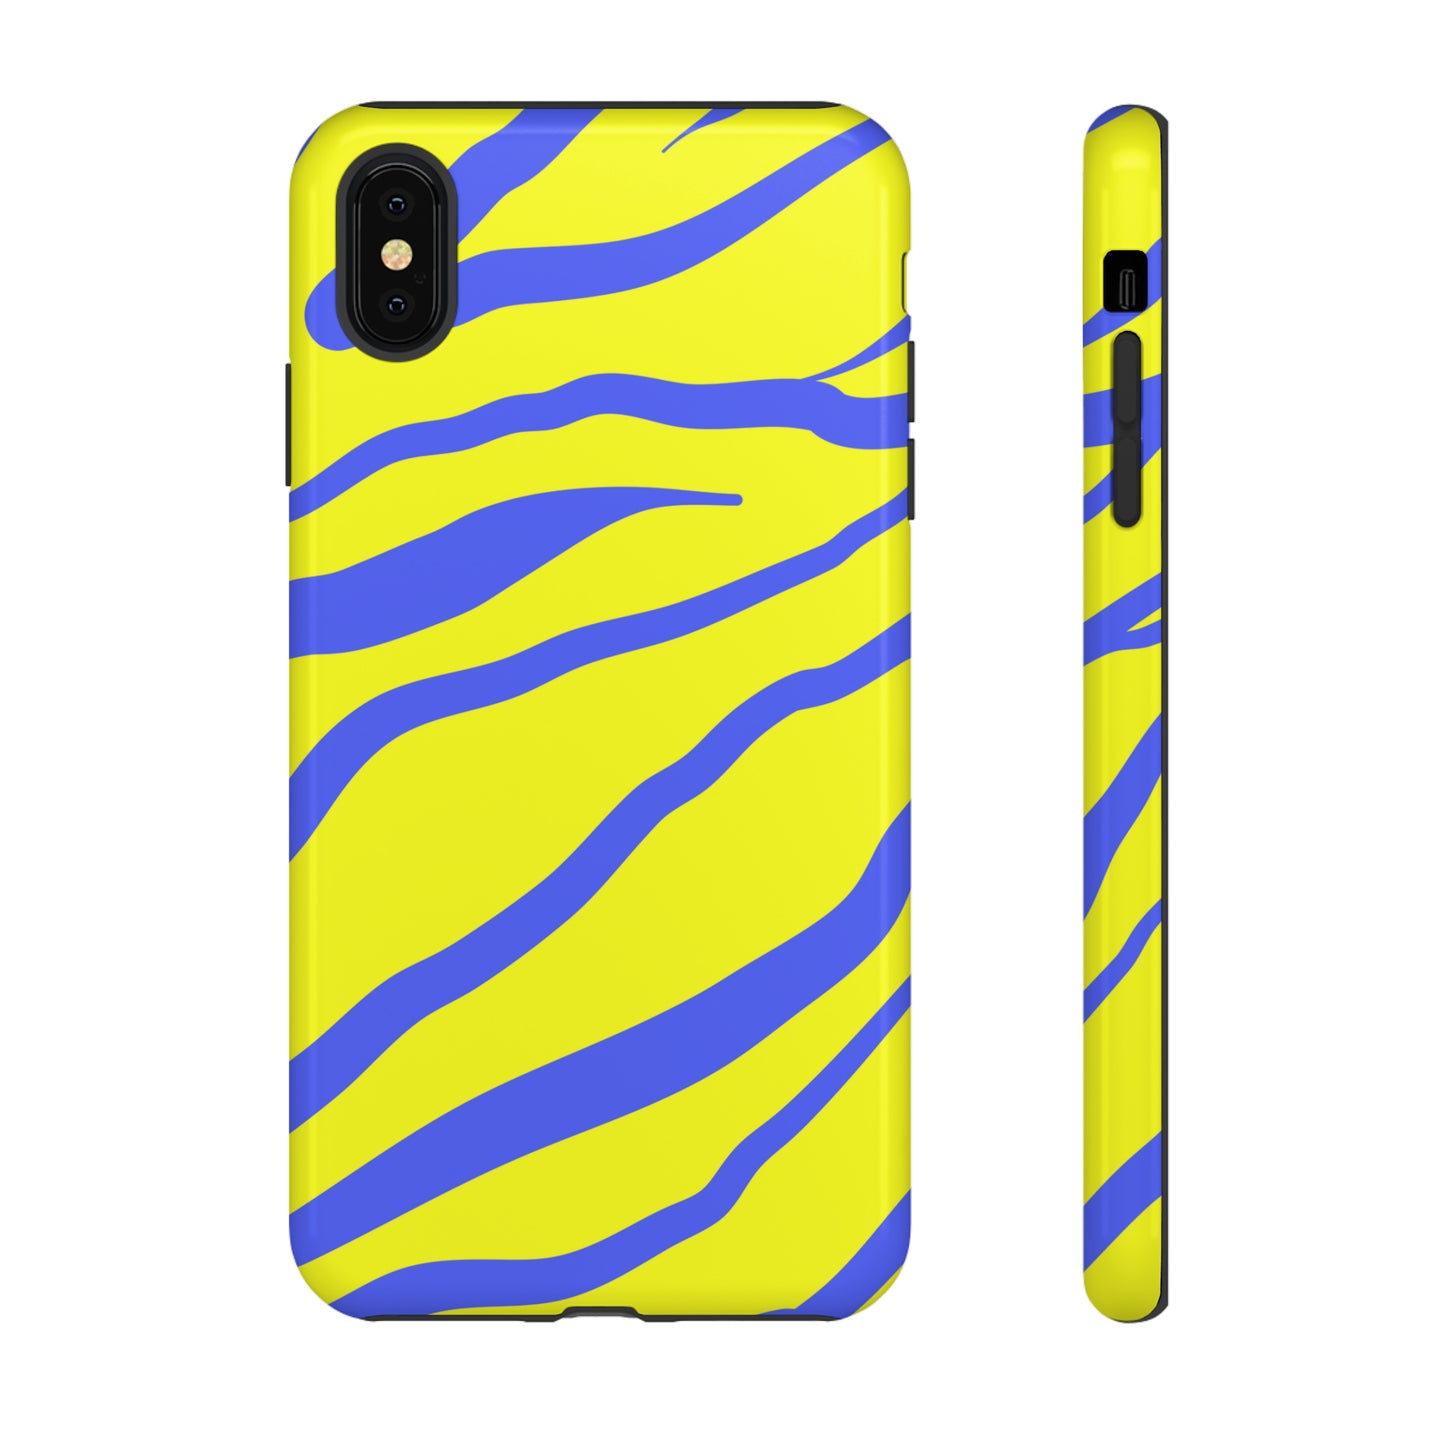 Neon Zebra - Tough Phone Case